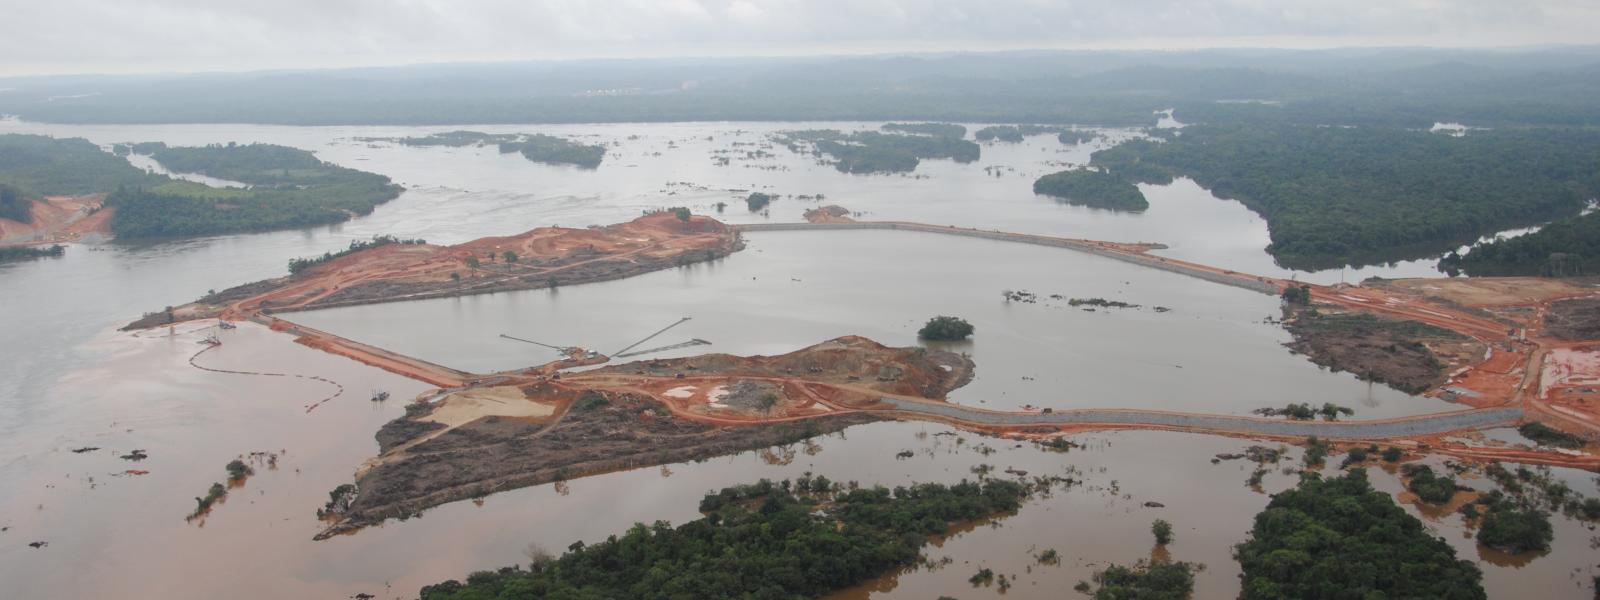 Aerial photo of Belo Monte